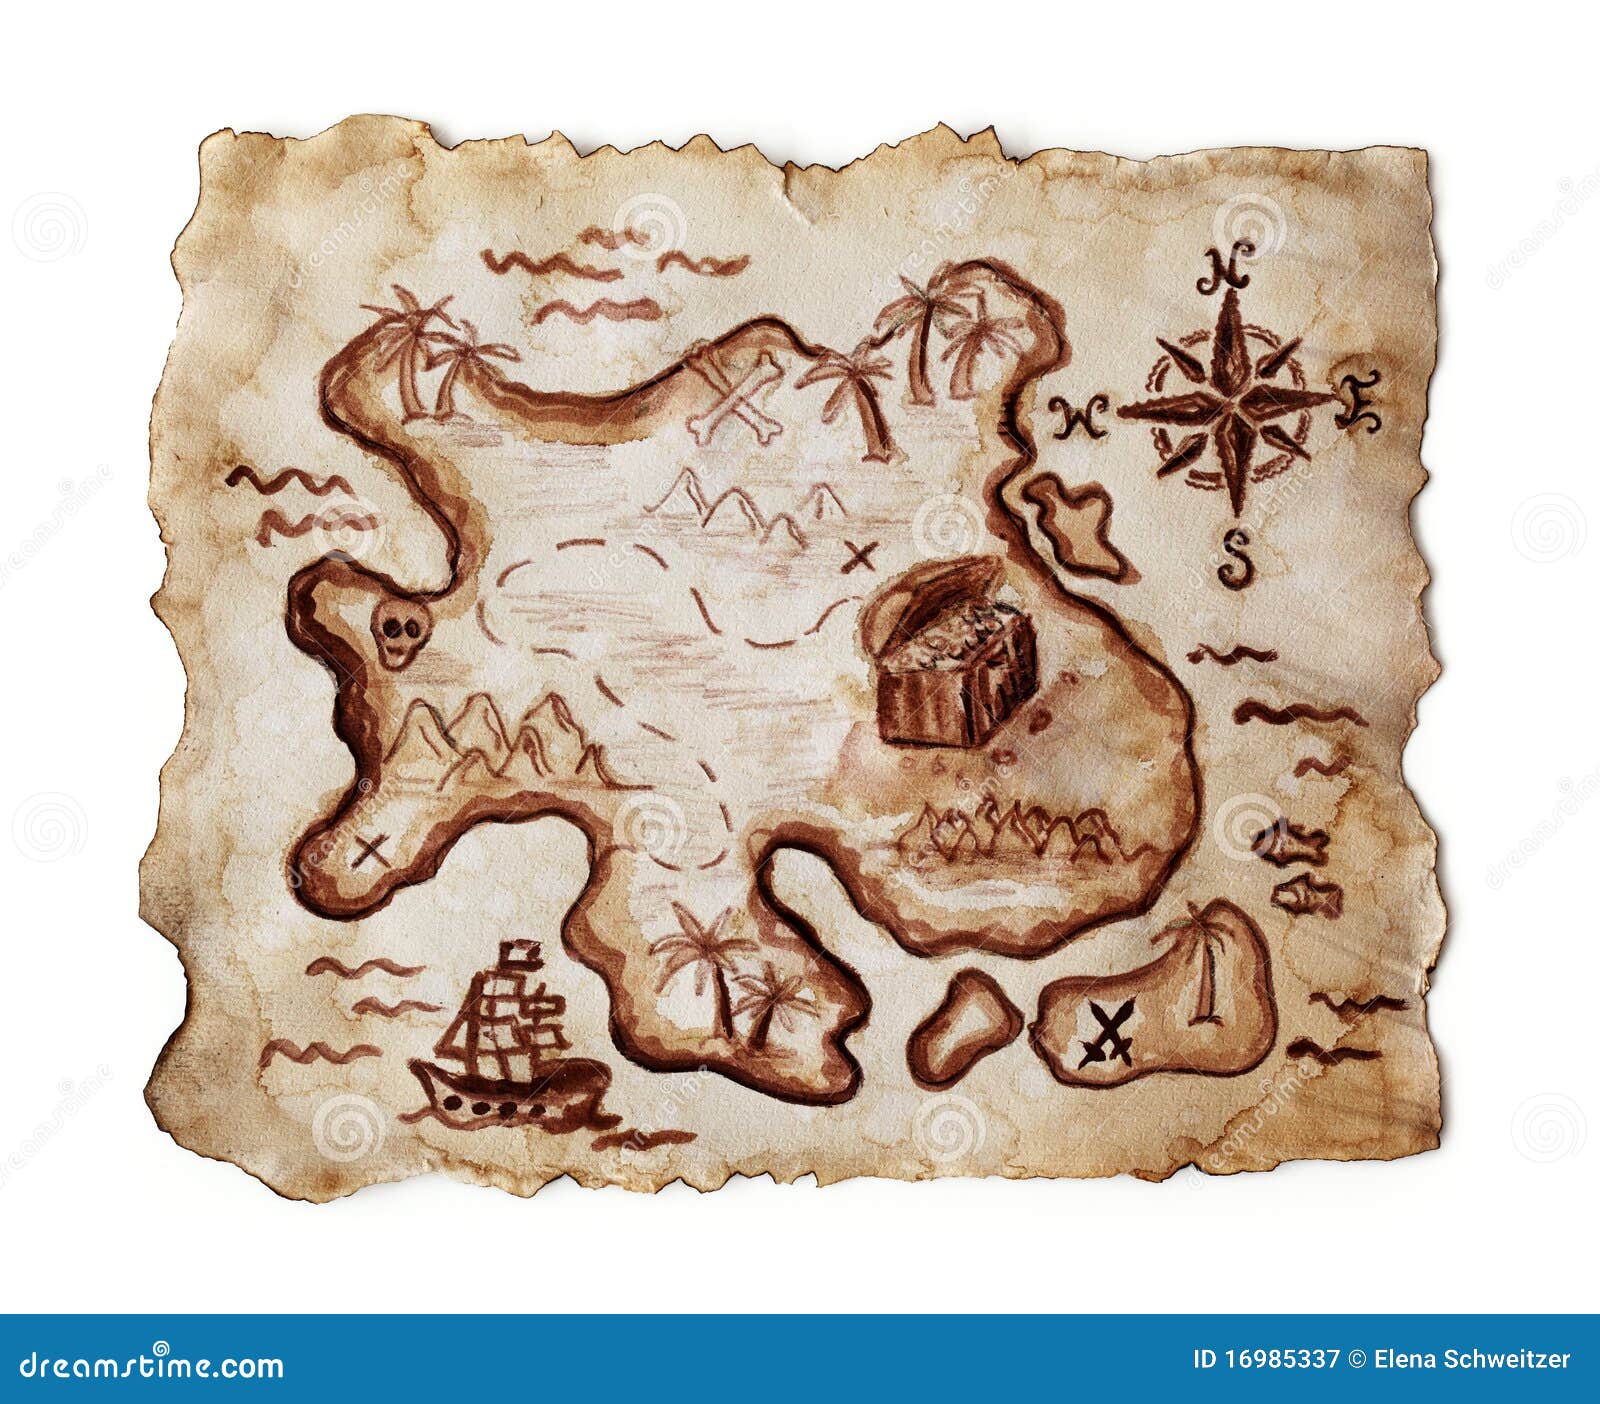 Pirate Treasure Map stock image. Image of mystery, treasure - 21081557